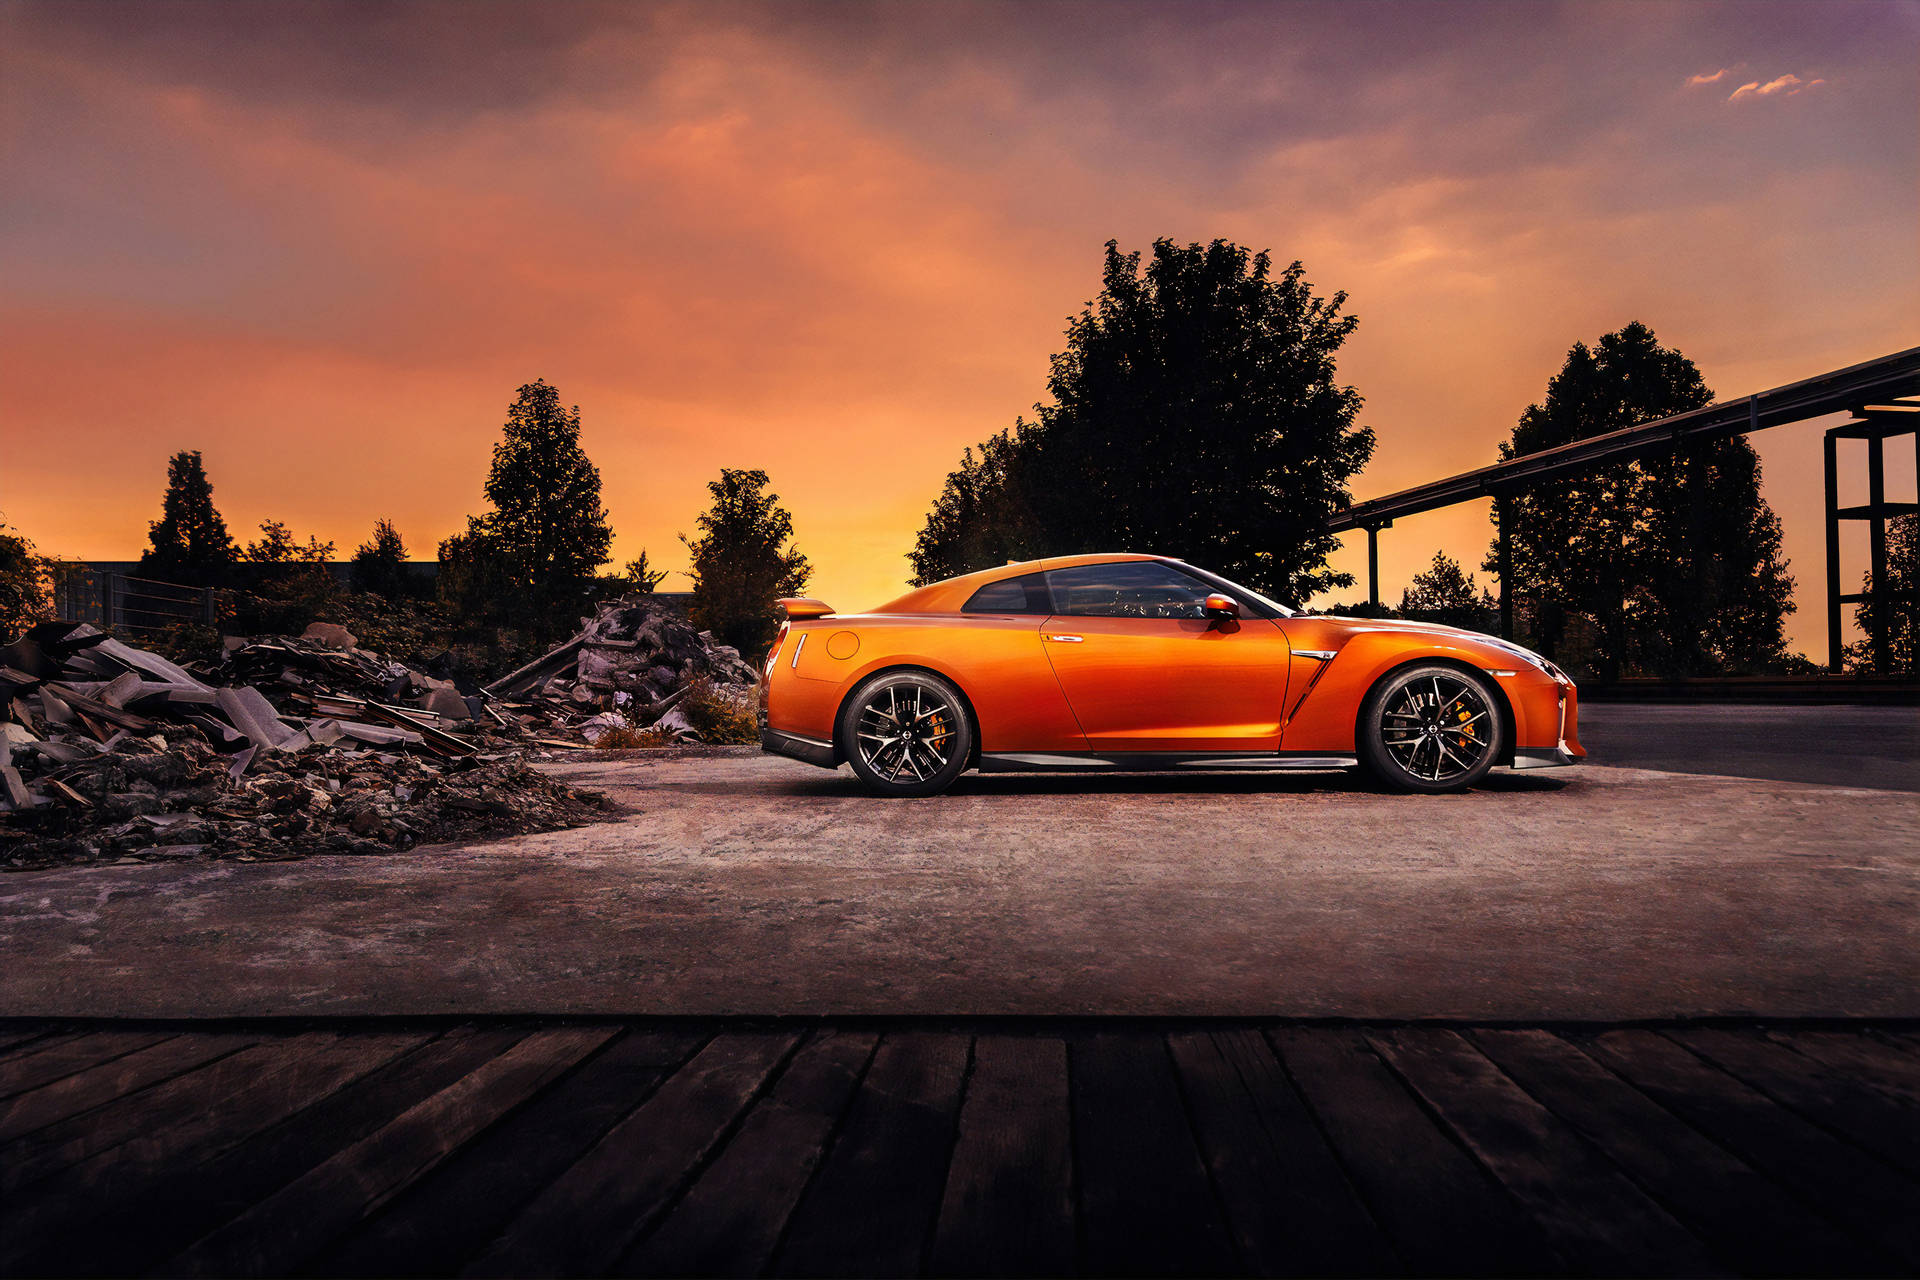 Sunset And Orange Nissan Gt R 4k